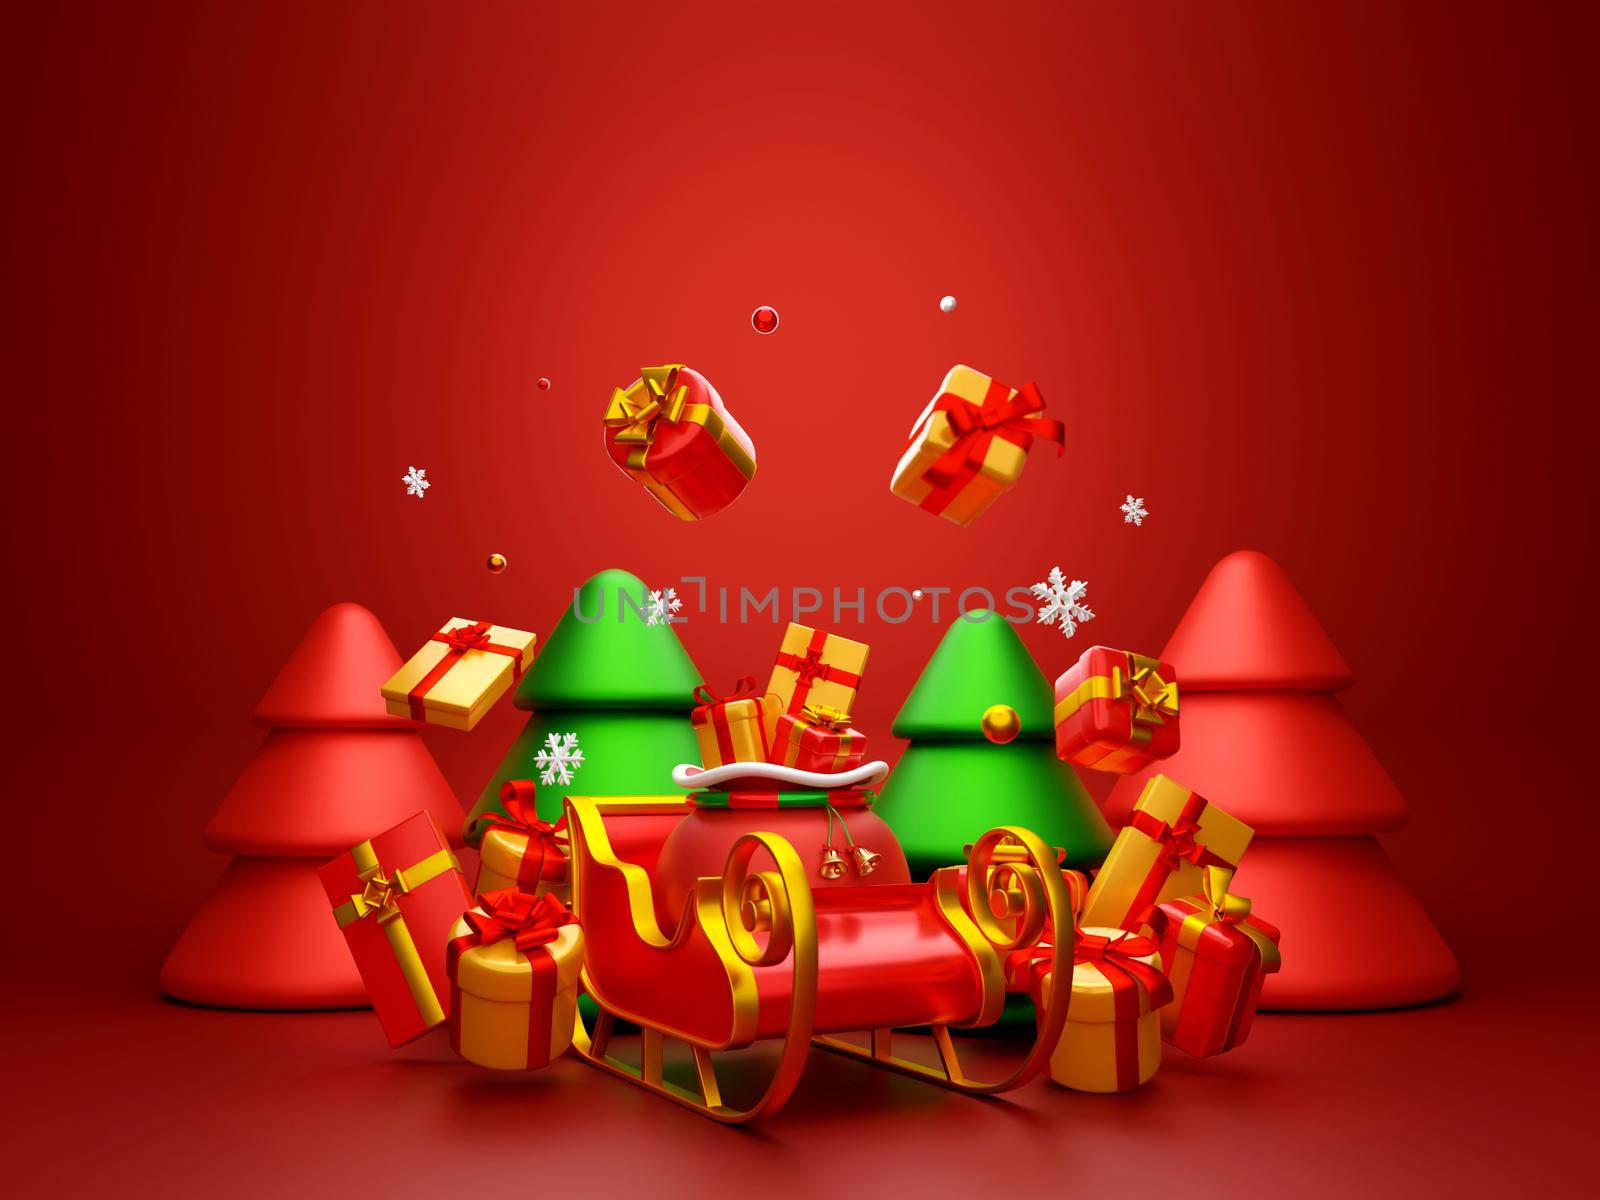 Christmas postcard of Christmas bag and sleigh on red background, 3d illustration